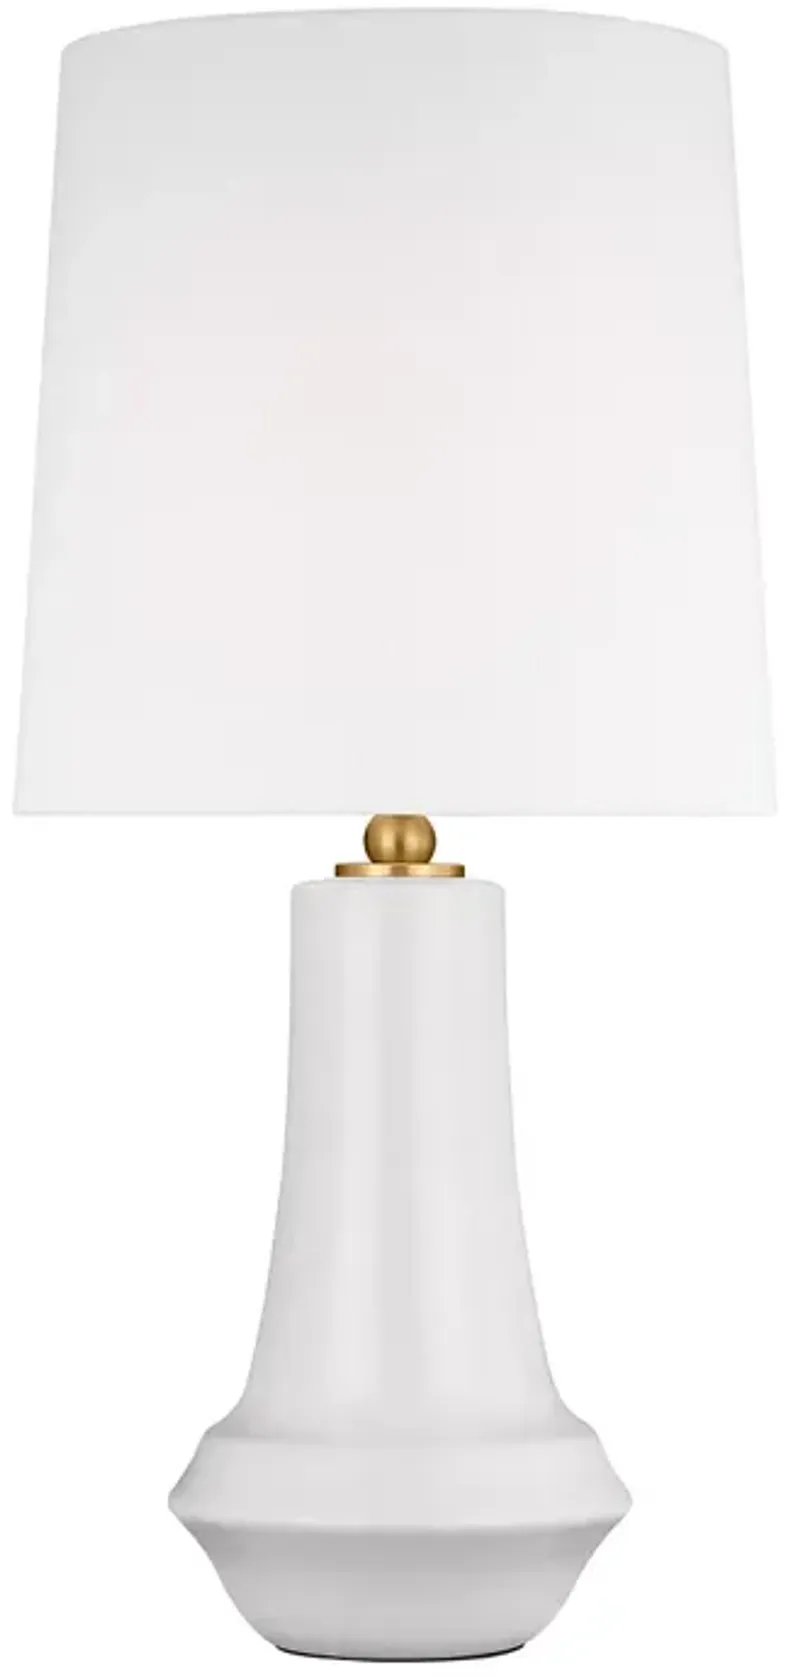 Thomas O'Brien Jenna Medium Table Lamp